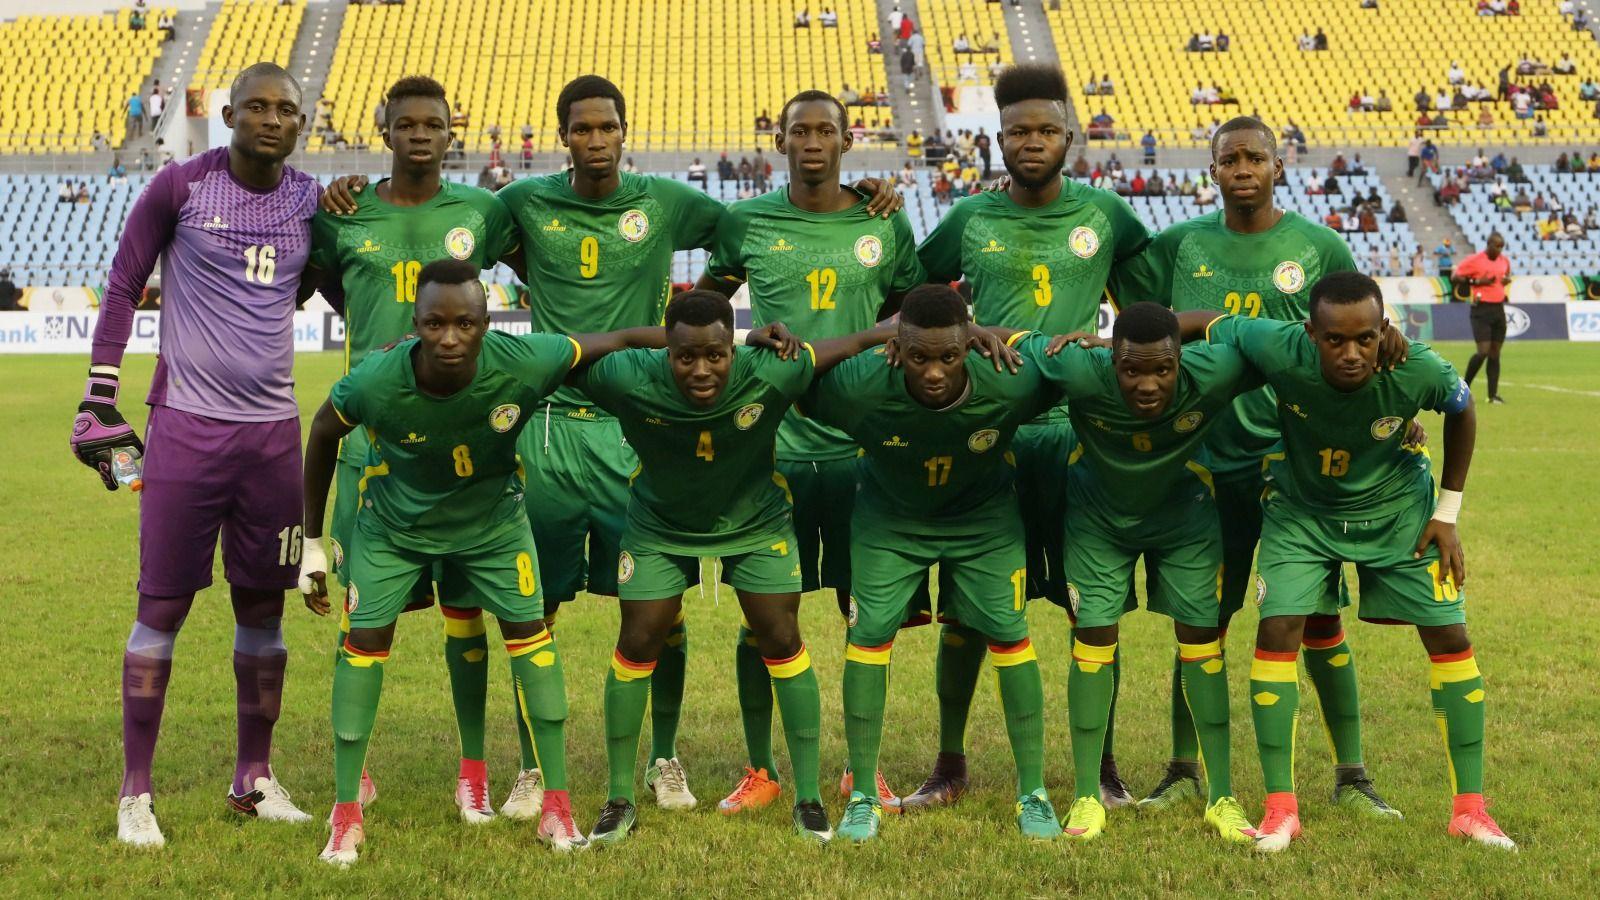 Senegal Football Team In 2018 World Cup